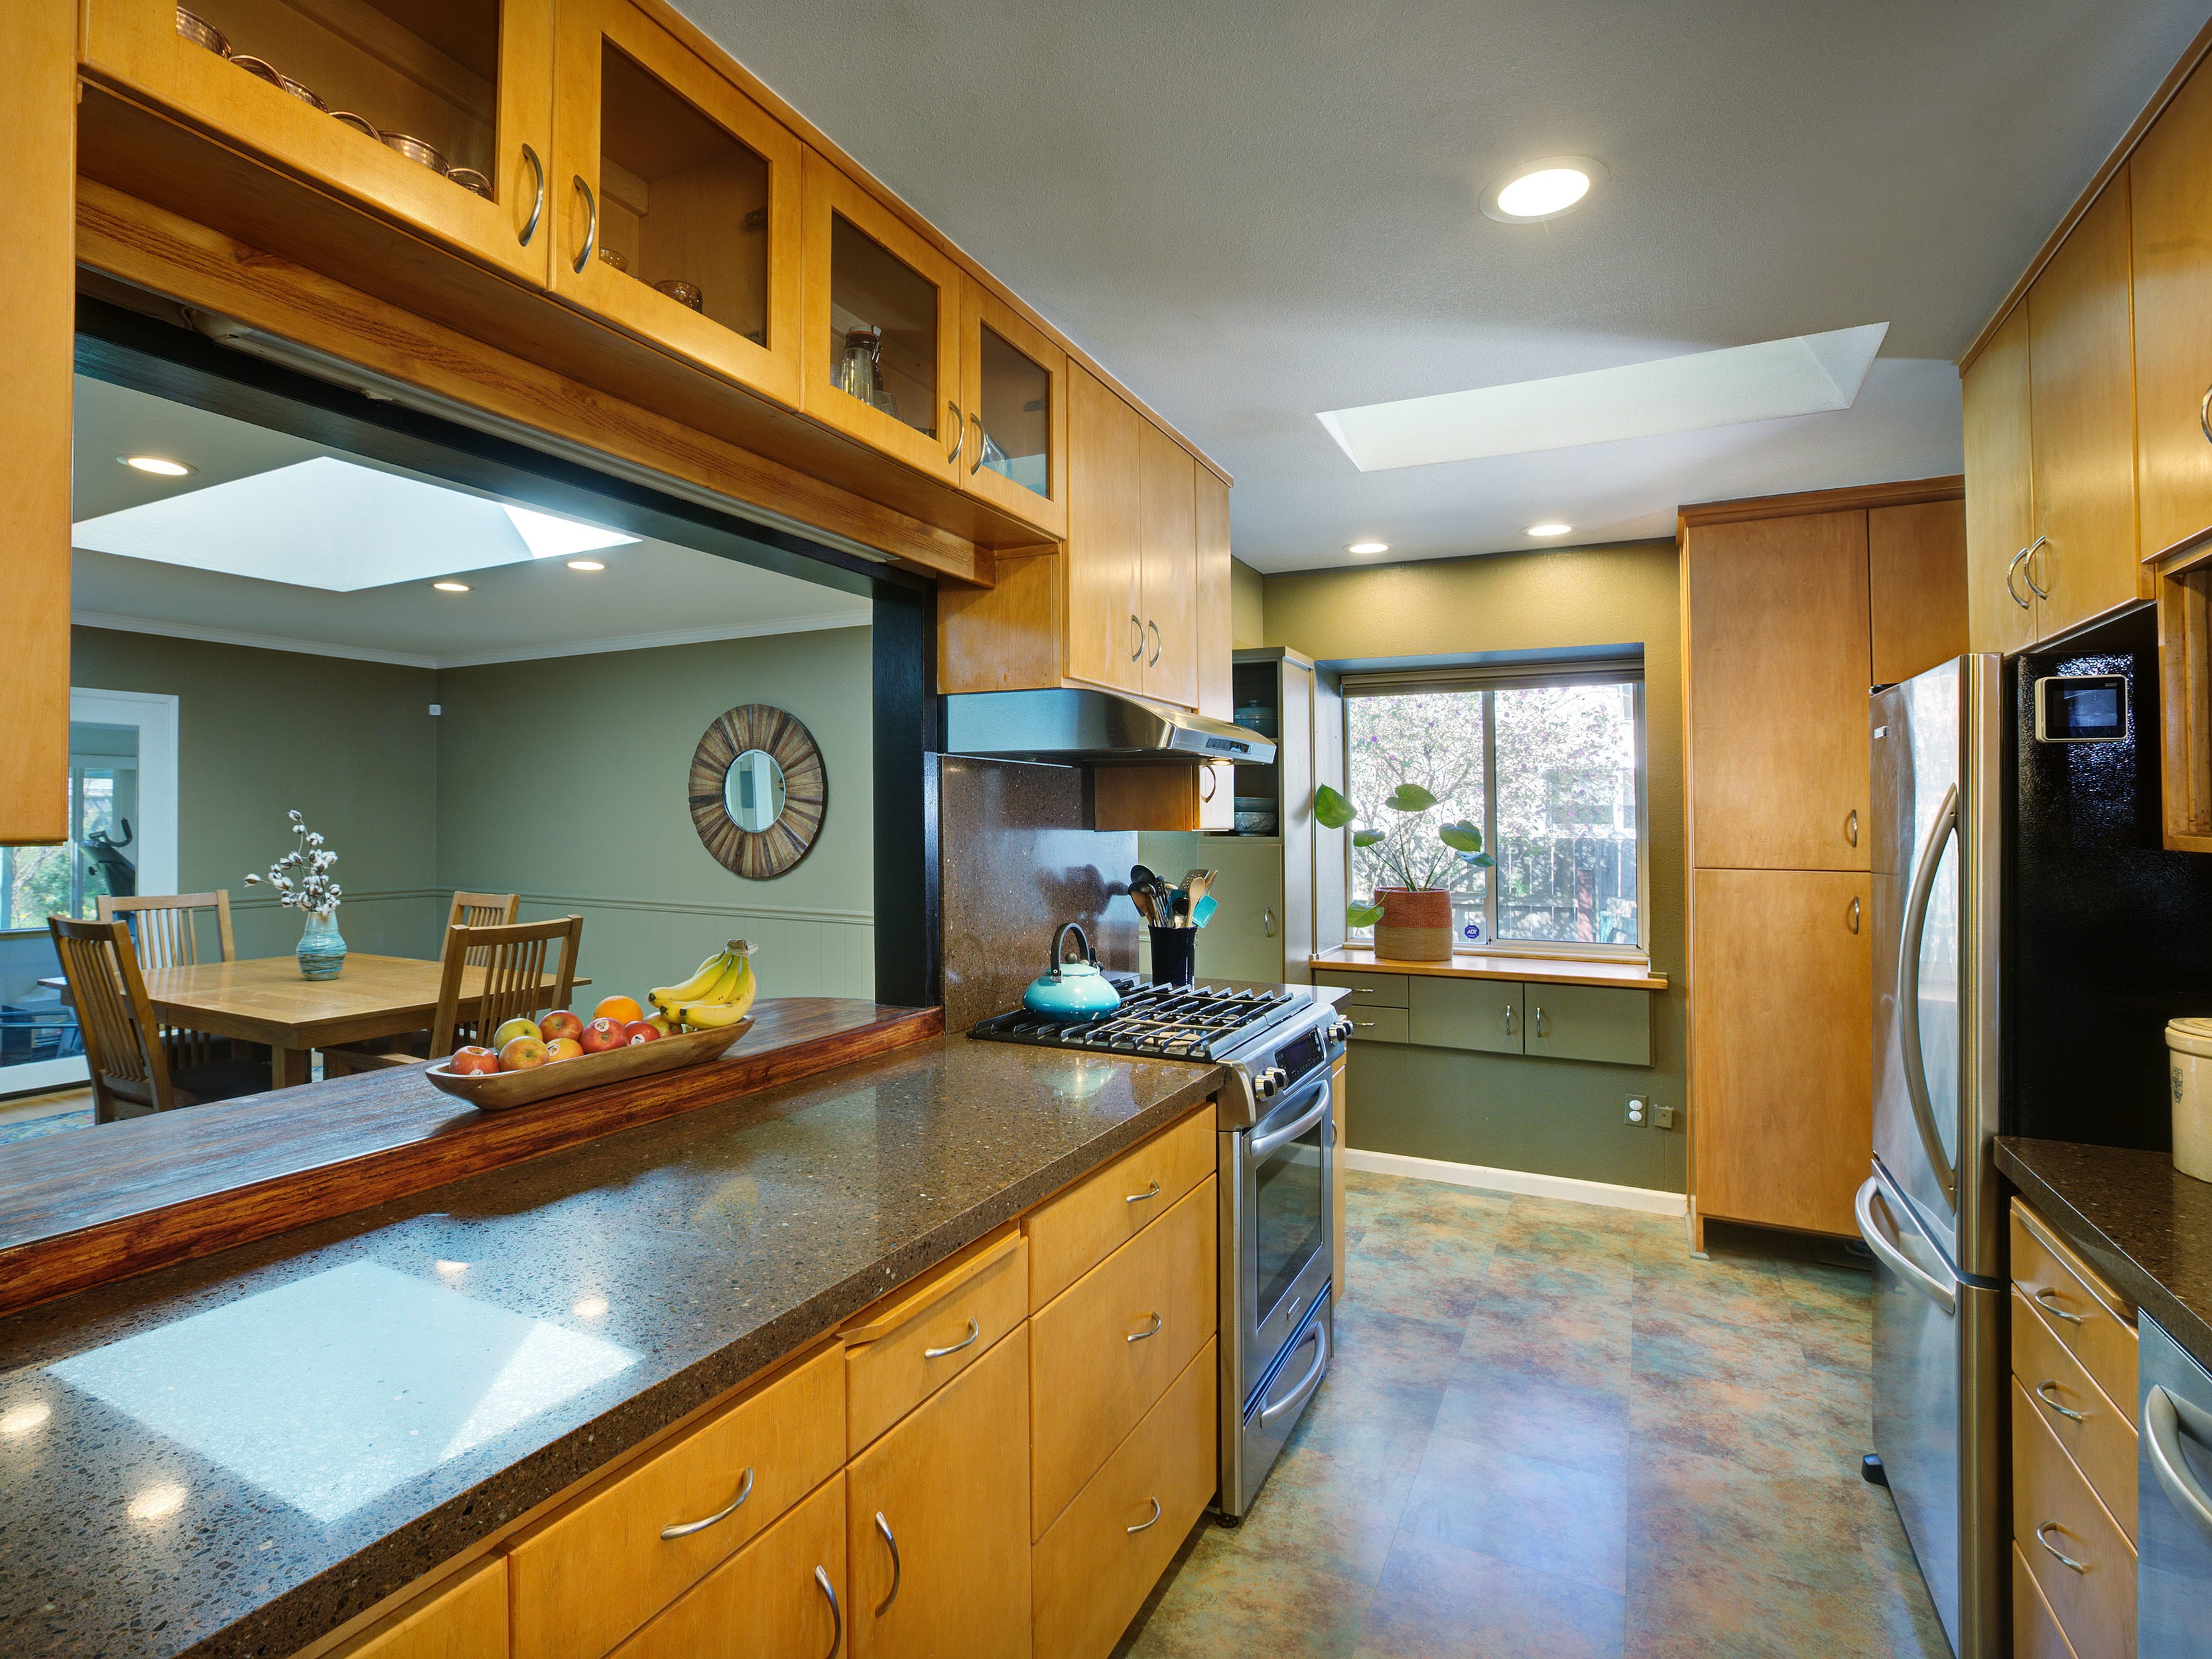 Kitchen-skylight-natural-wood-cabinets.jpg#asset:5955